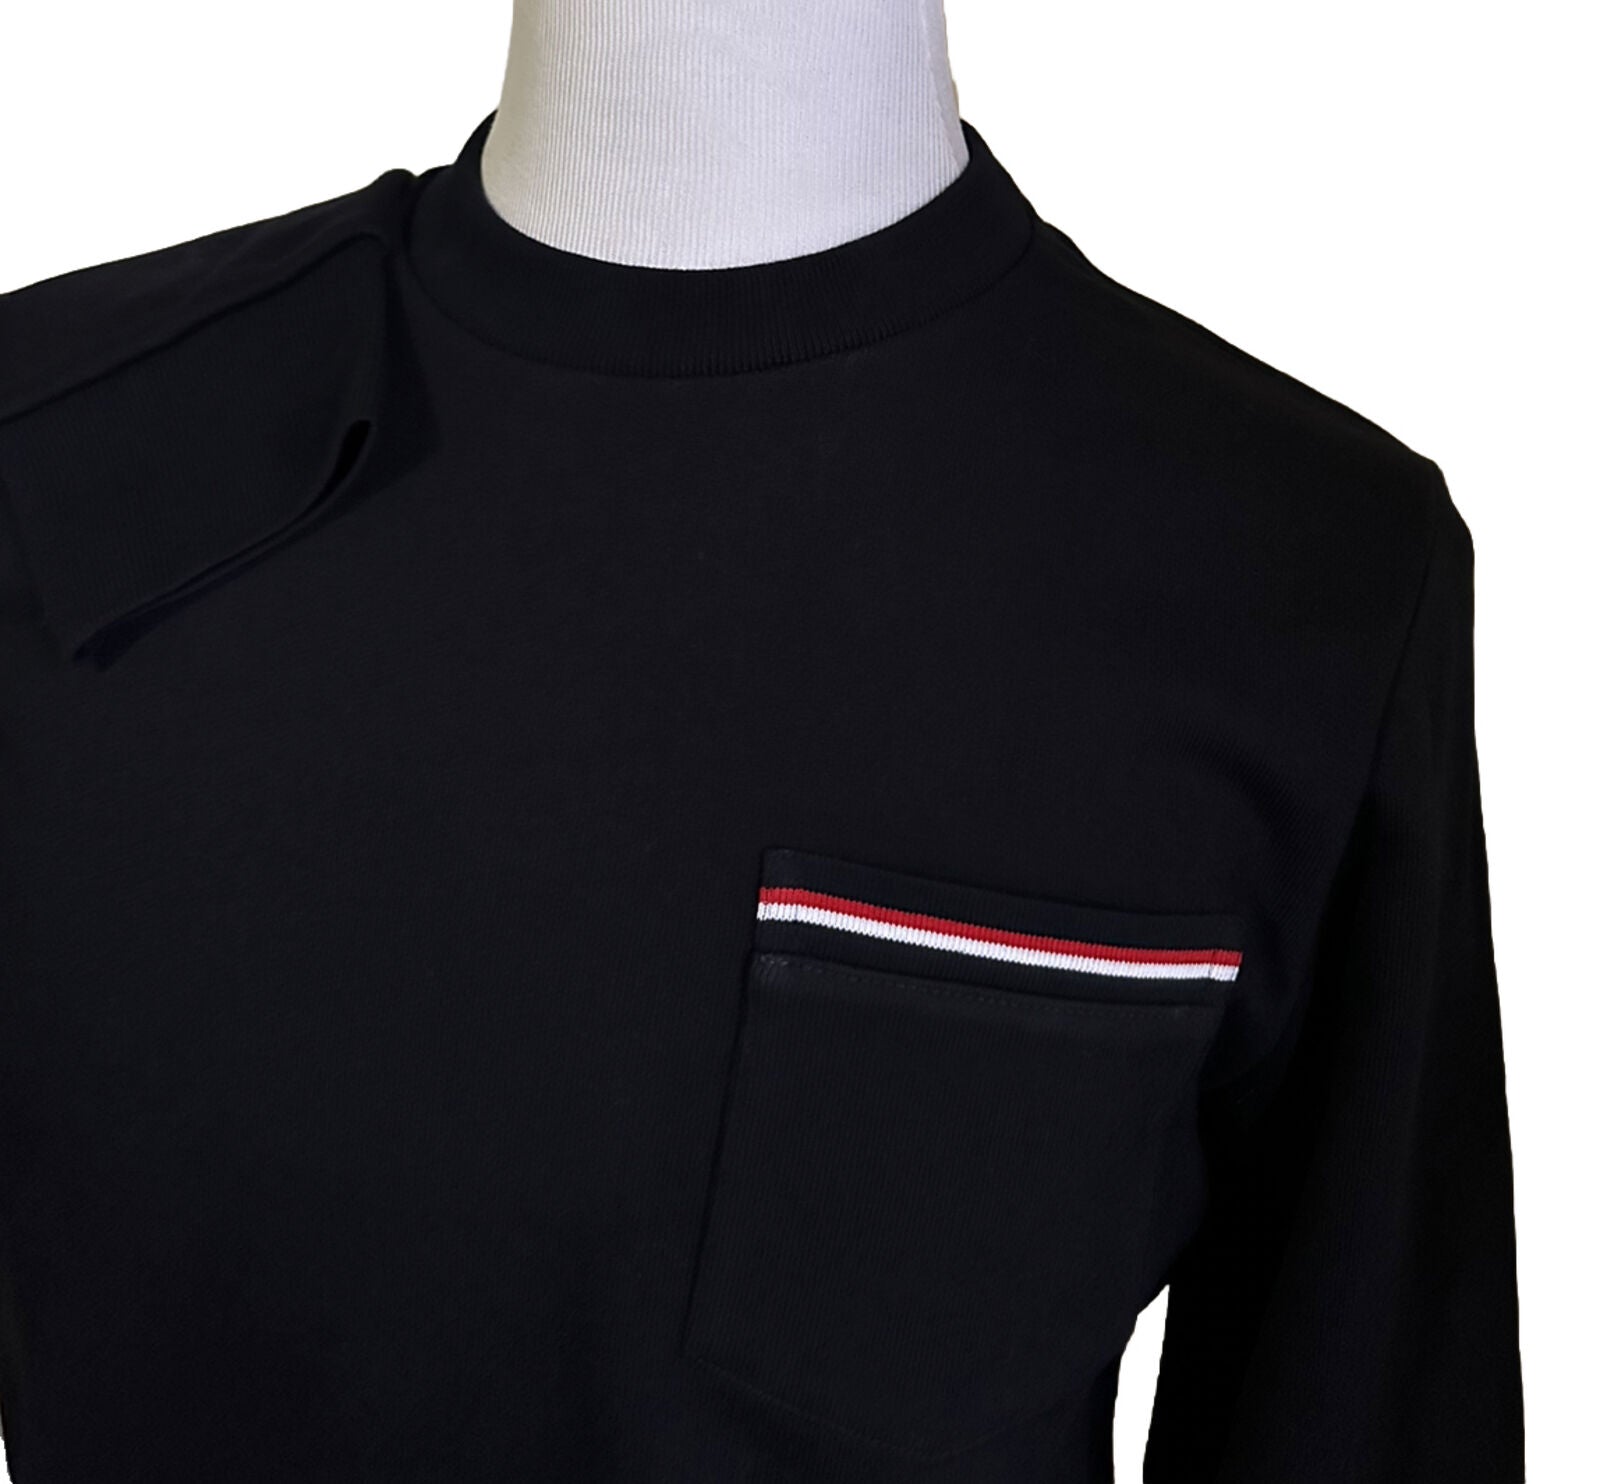 NWT Thom Browne Men’s Crewneck Sweatshirt Pullover Navy M ( 2 ) Italy